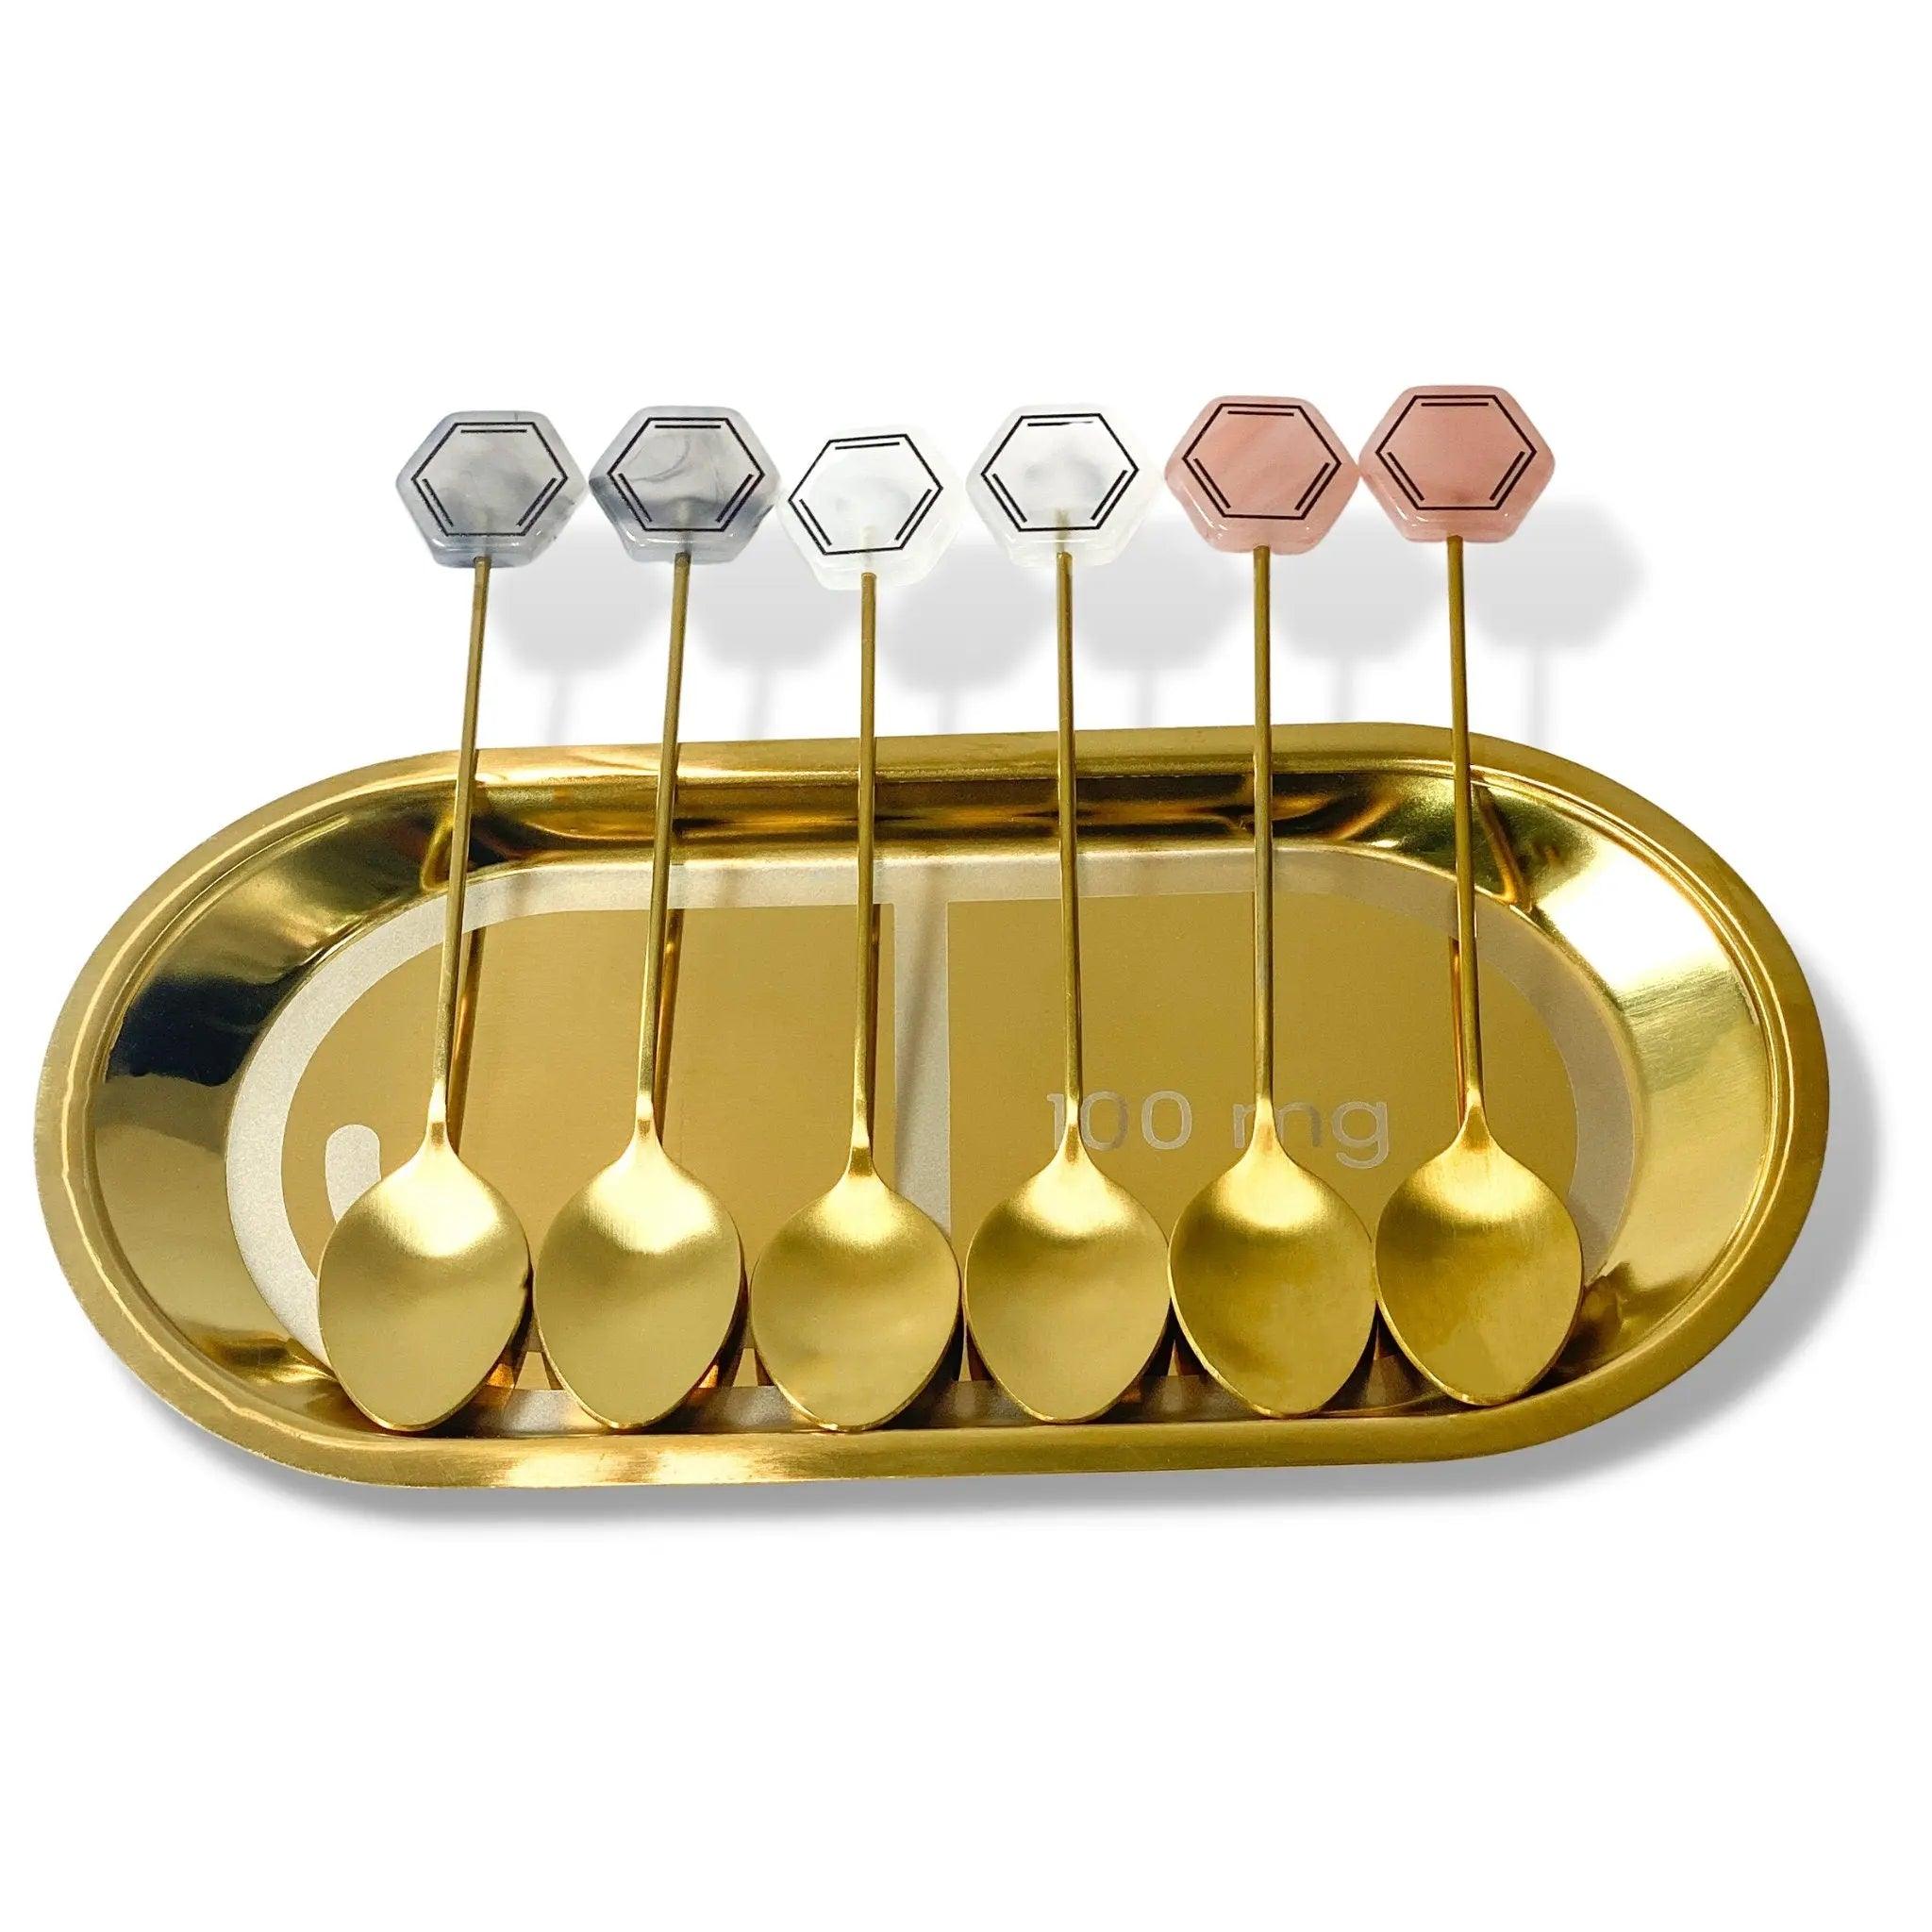 Chemistry Cocktail Stirrer Spoon | Set of 6 | Benzene Teaspoon | Gold Teaspoon